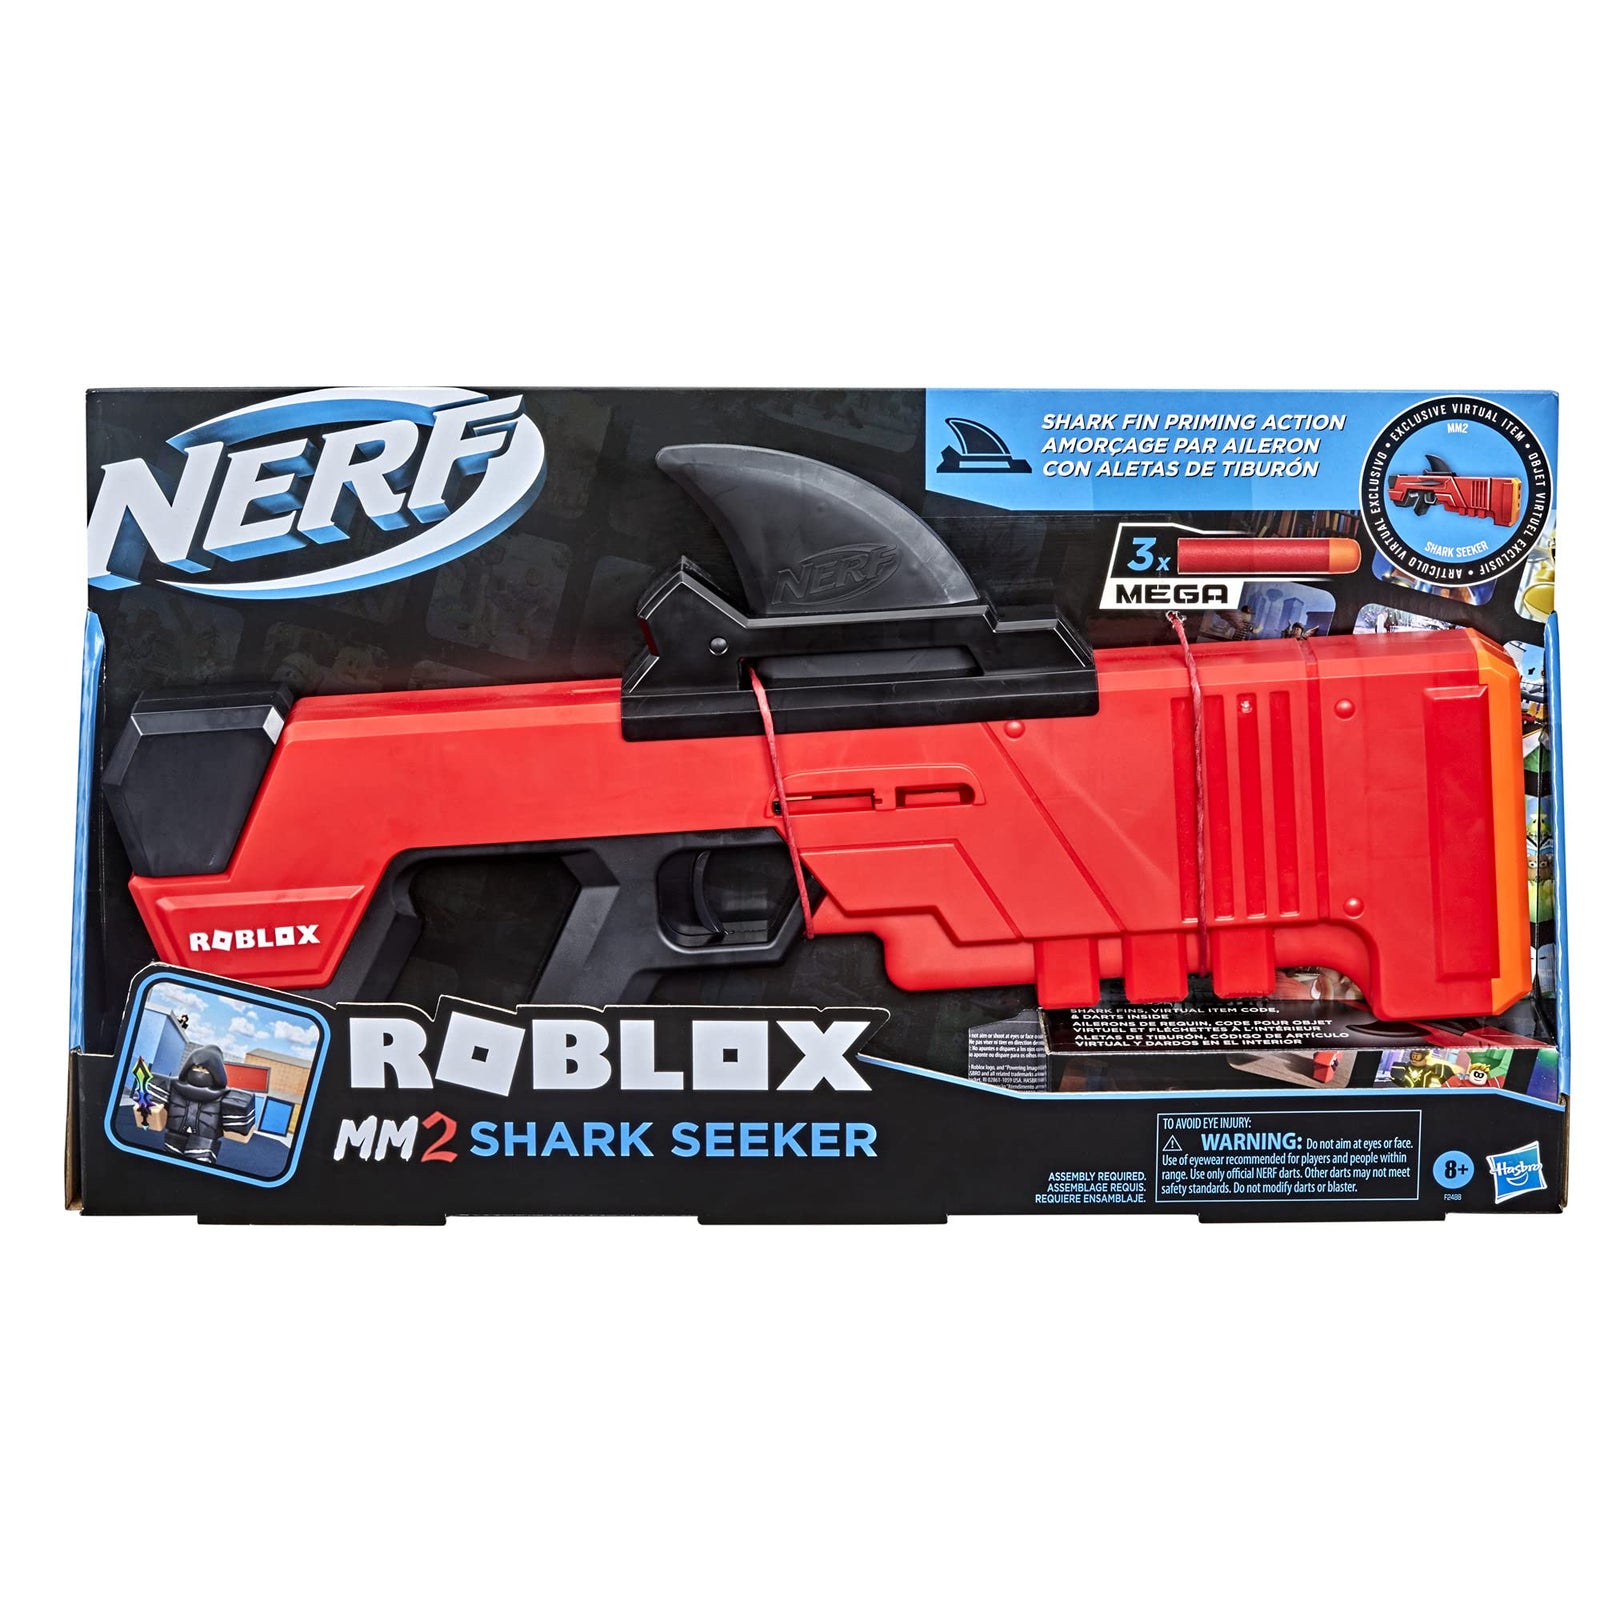 NERF Roblox MM2: Shark Seeker Dart Blaster, Shark-Fin Priming, 3 Mega Darts, Code to Unlock in-Game Virtual Item